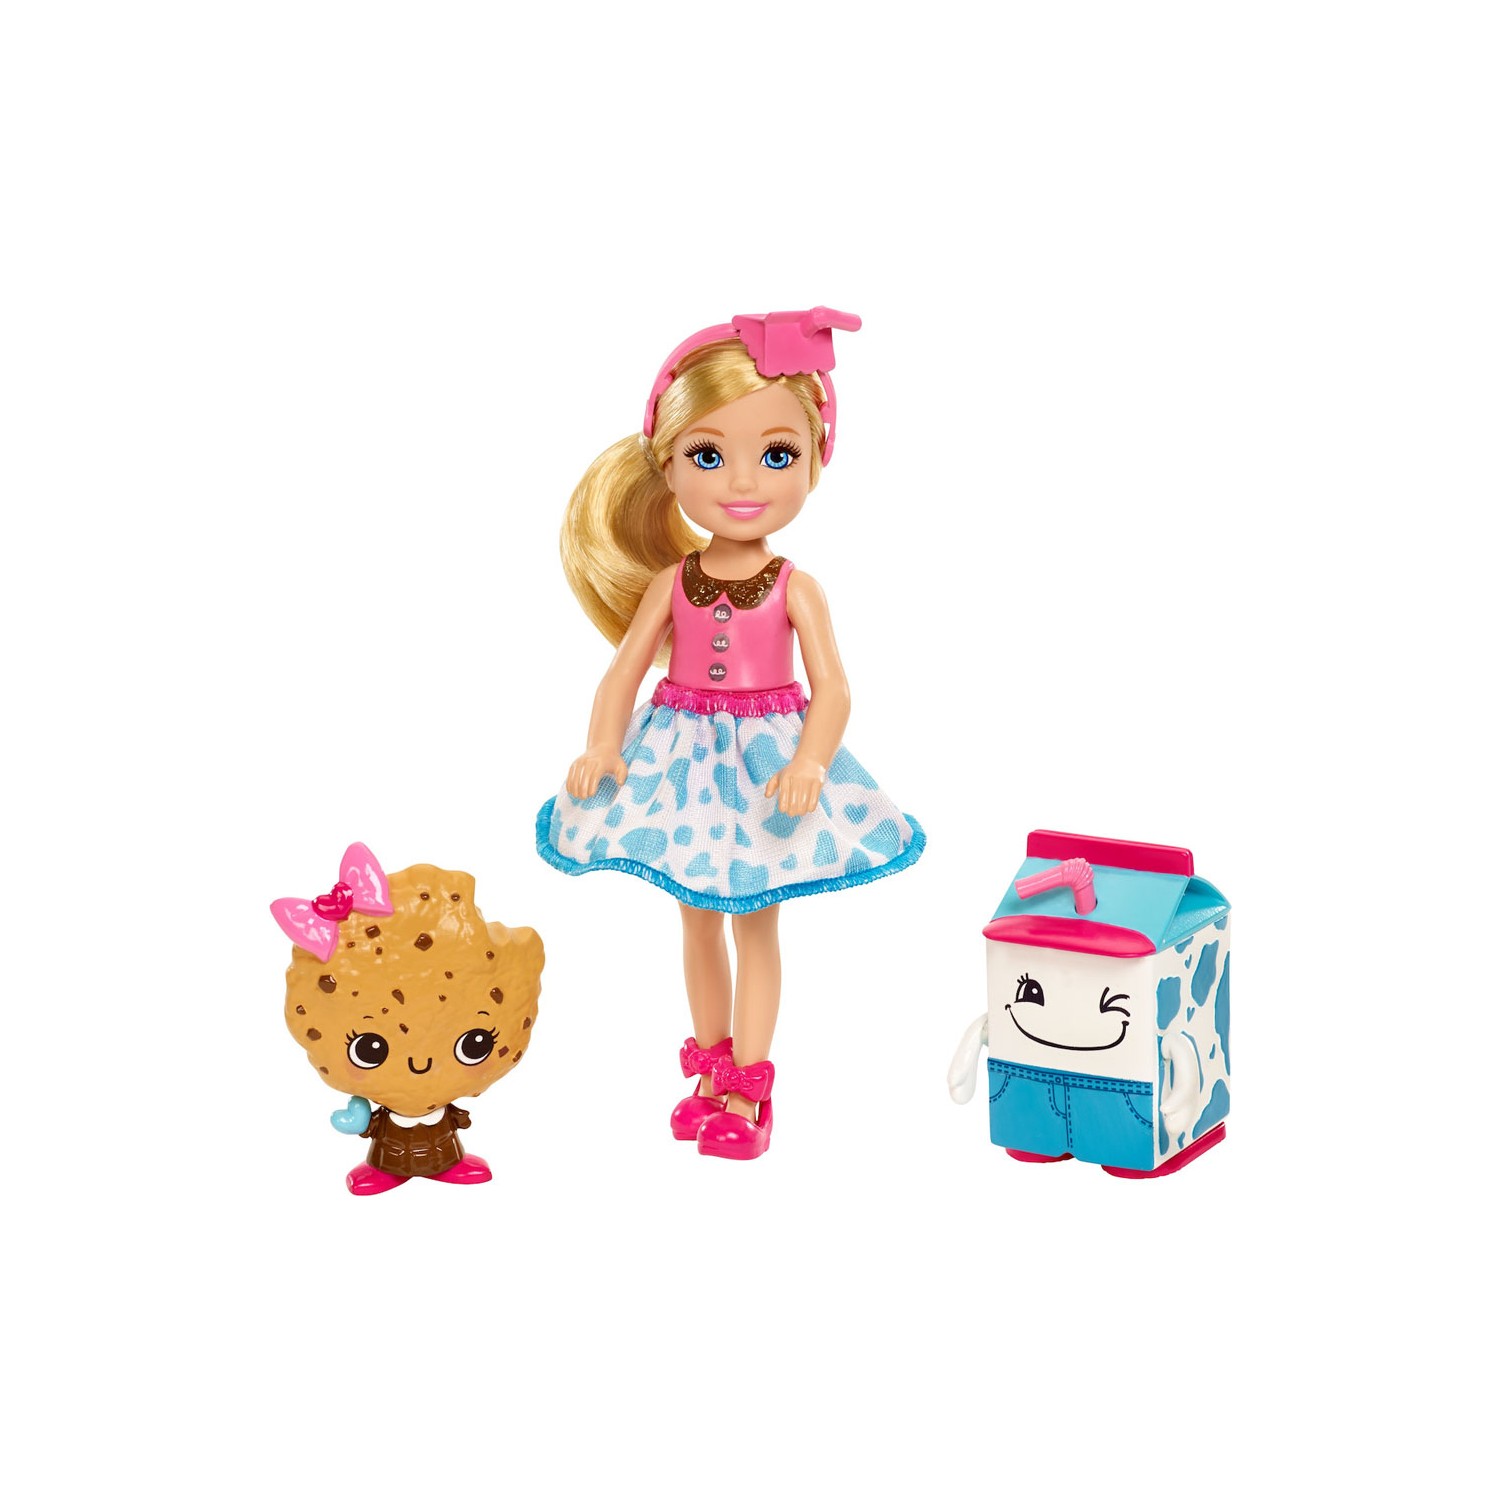 Кукла Barbie Dreamtopia Chelsea and its 2 Cute Friends Fdj11 комбинезон cute